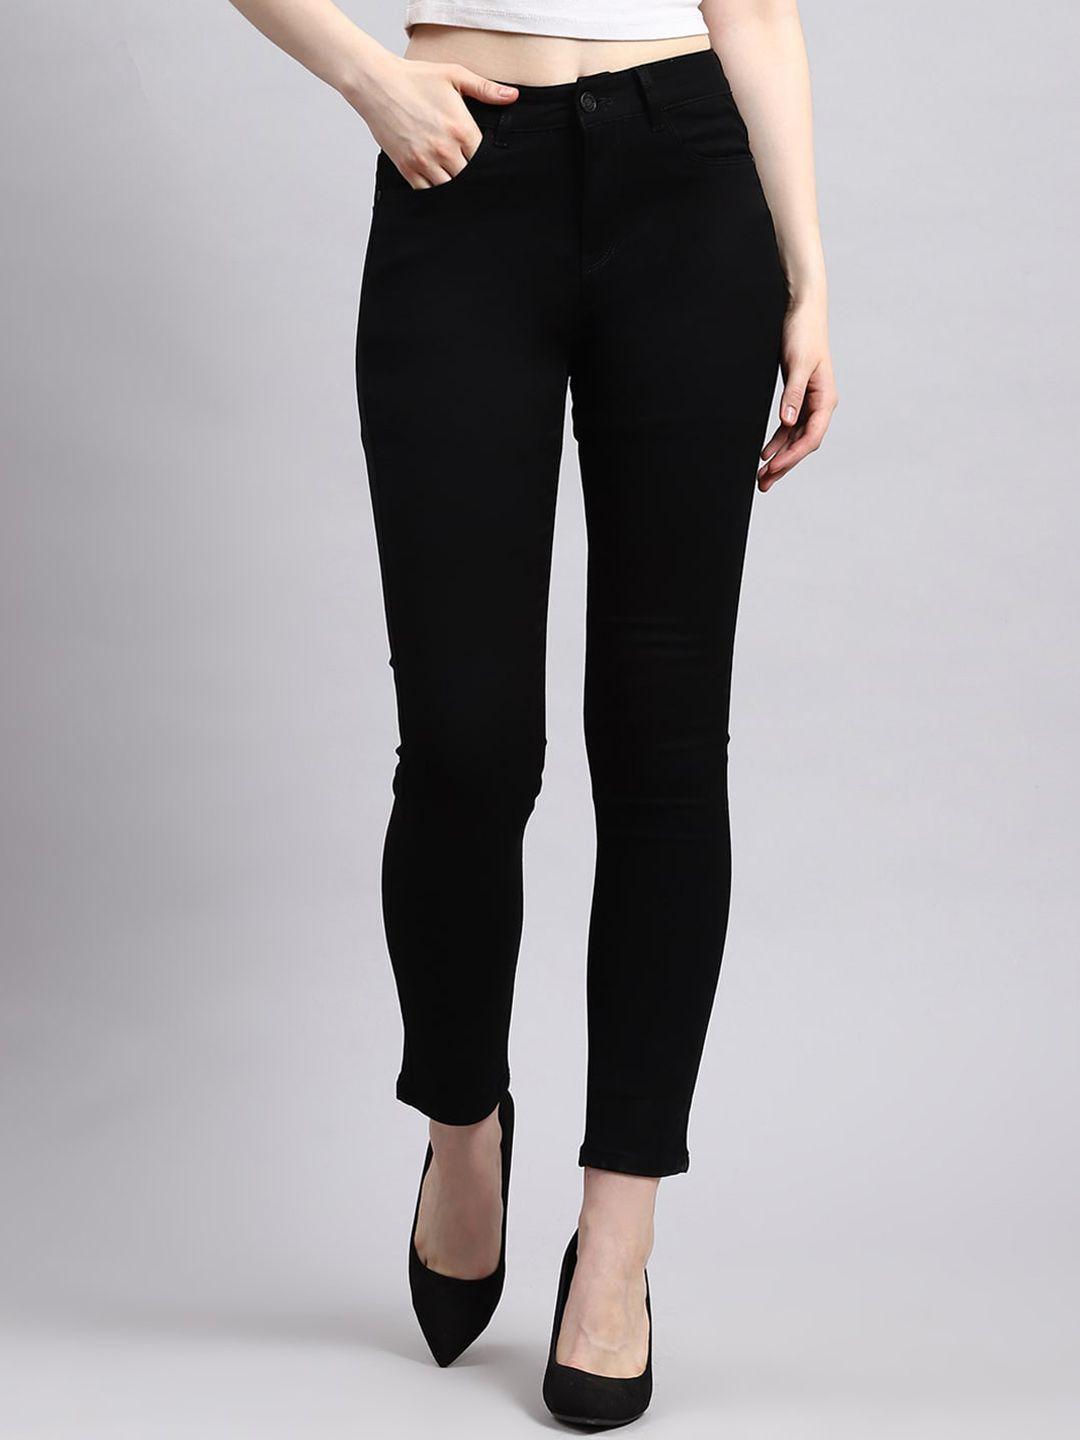 monte carlo women smart mid-rise slim fit jeans